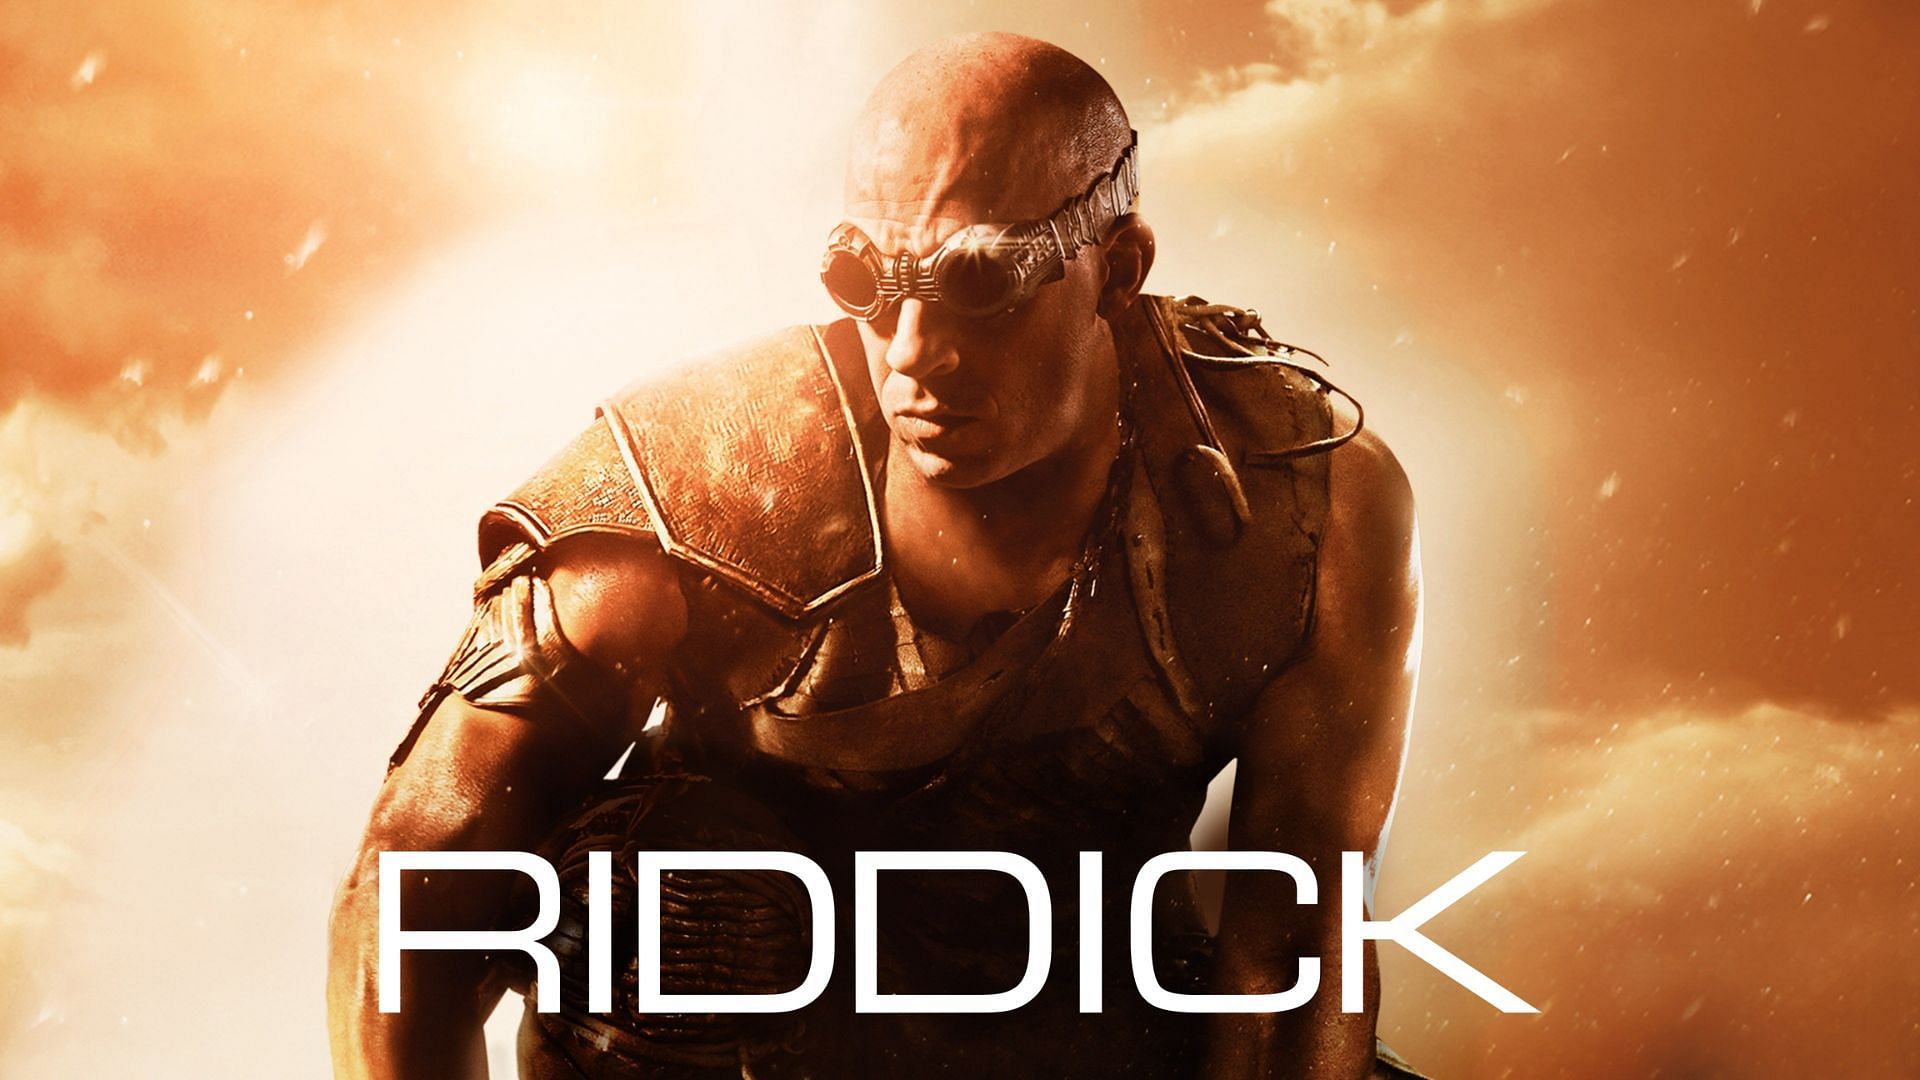 Poster for Riddick (Image Via Rotten Tomatoes)